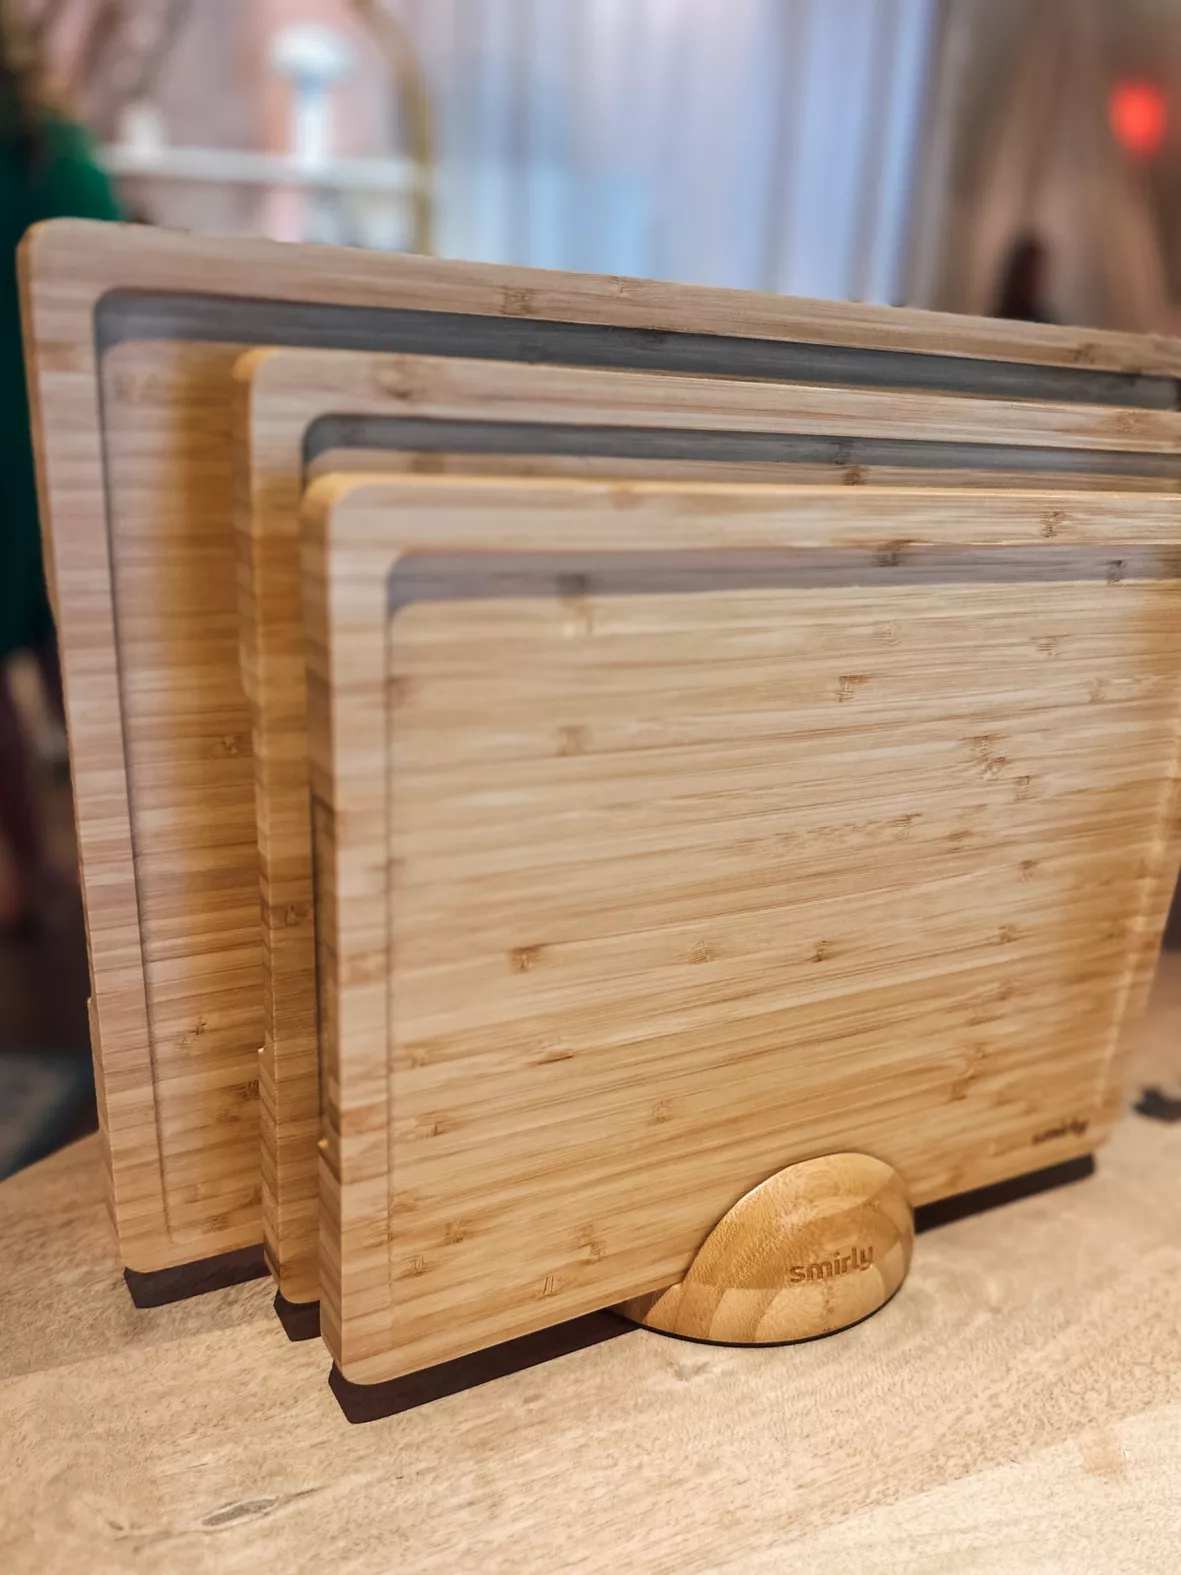  SMIRLY Bamboo Cutting Board Set - Wood Cutting Board